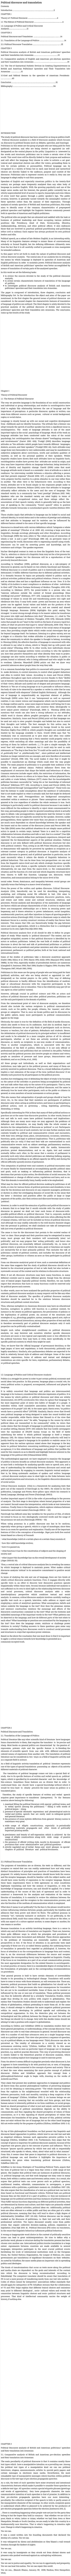 Political discourse and transalation